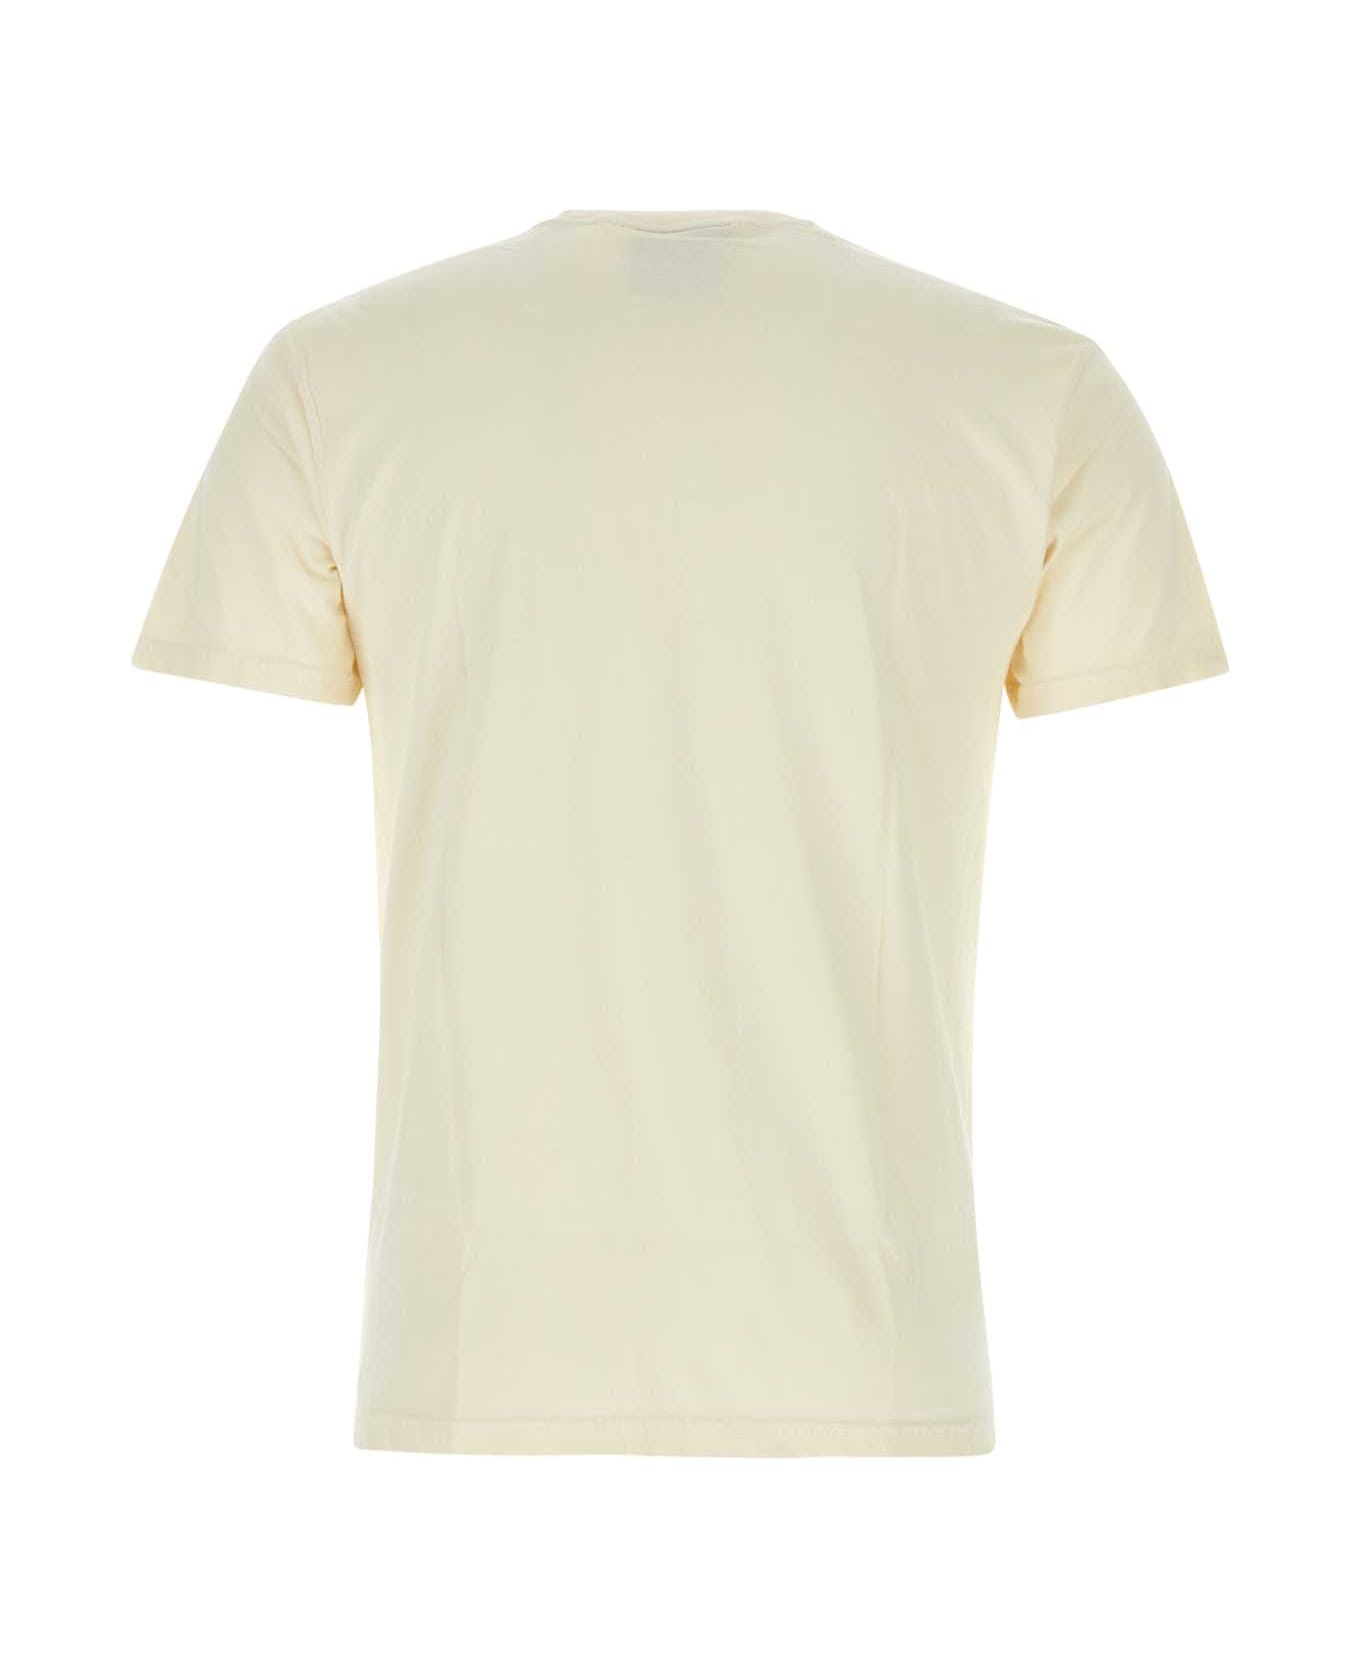 Kidsuper Cream Cotton T-shirt - CREAM